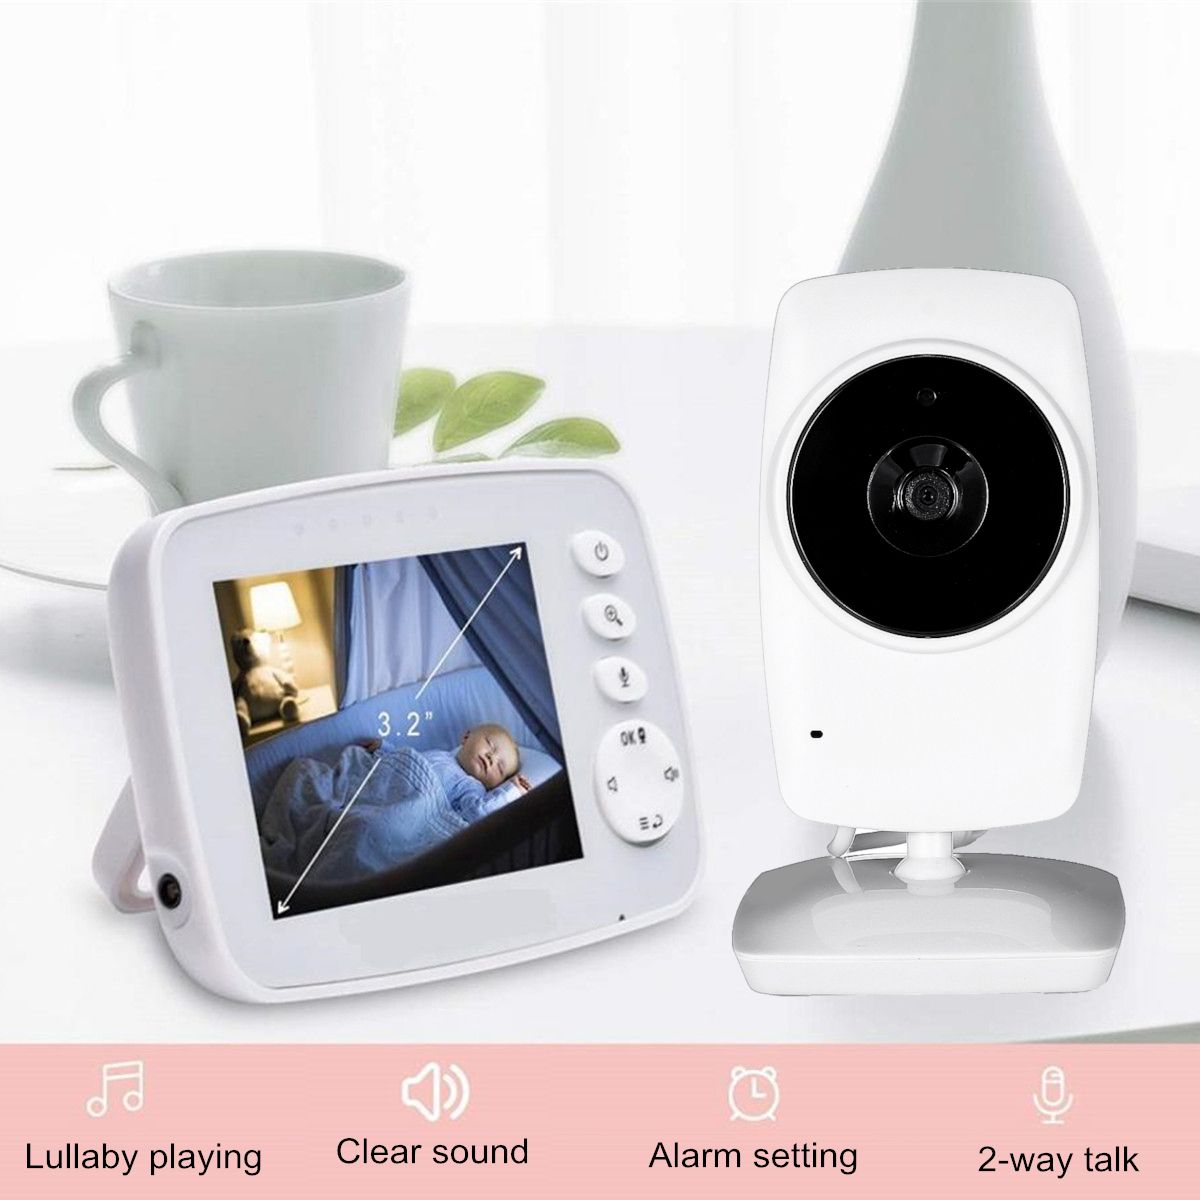 32-inch-LCD-Baby-Monitor-Nanny-Temperature-Monitoring-Lullaby-2-Way-Audio-IR-Night-Vision-Security-T-1563222